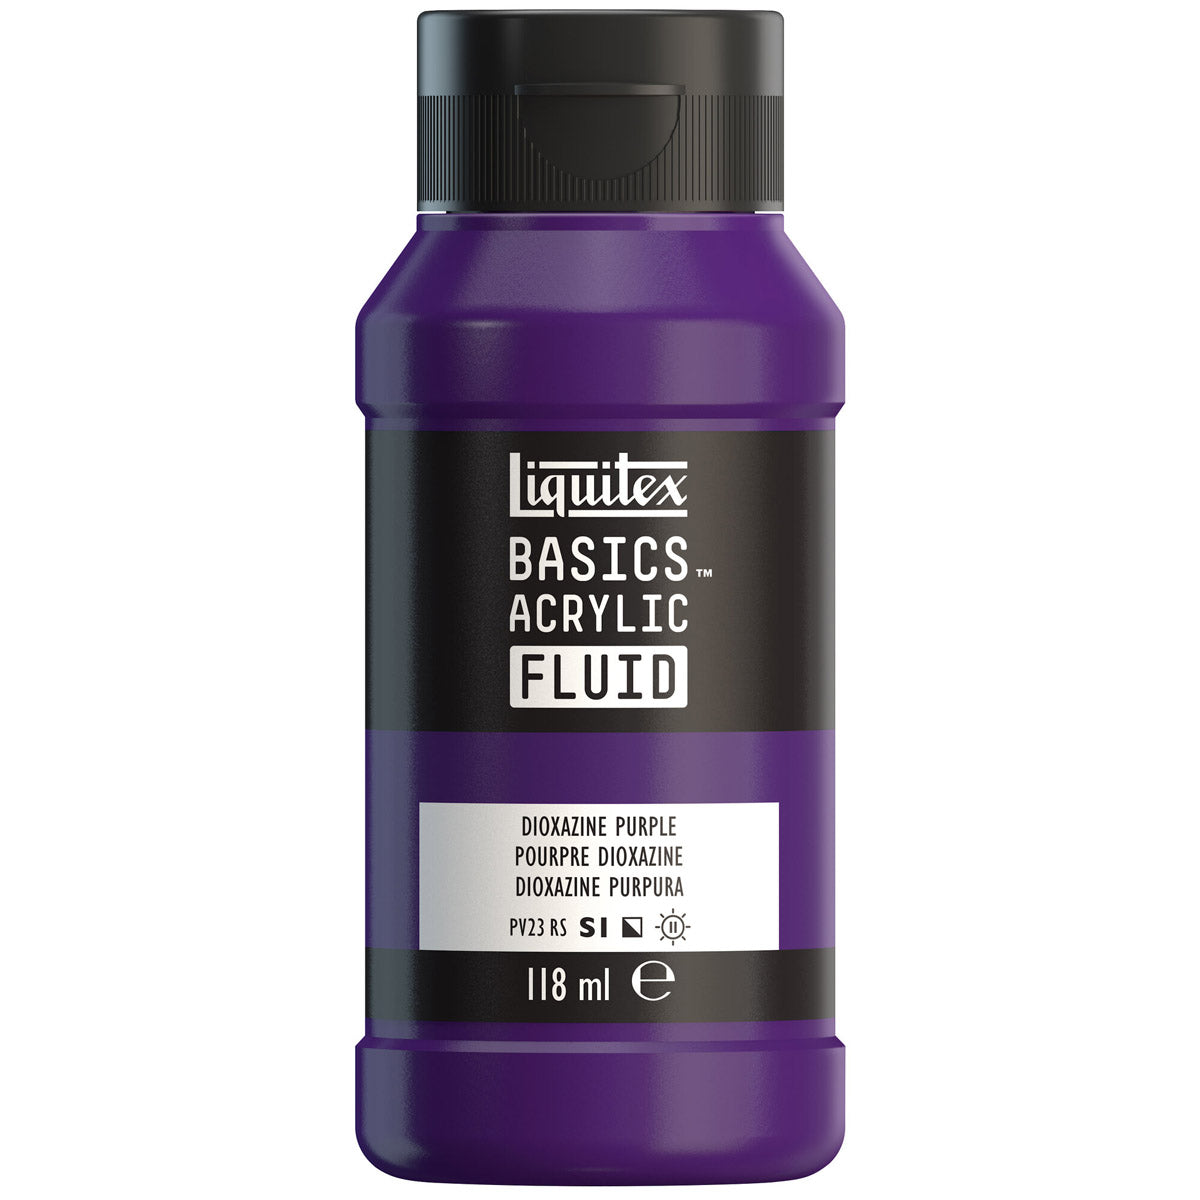 Liquitex Basics Fluid Acrylic 118ml - Dioxazine Purple S1